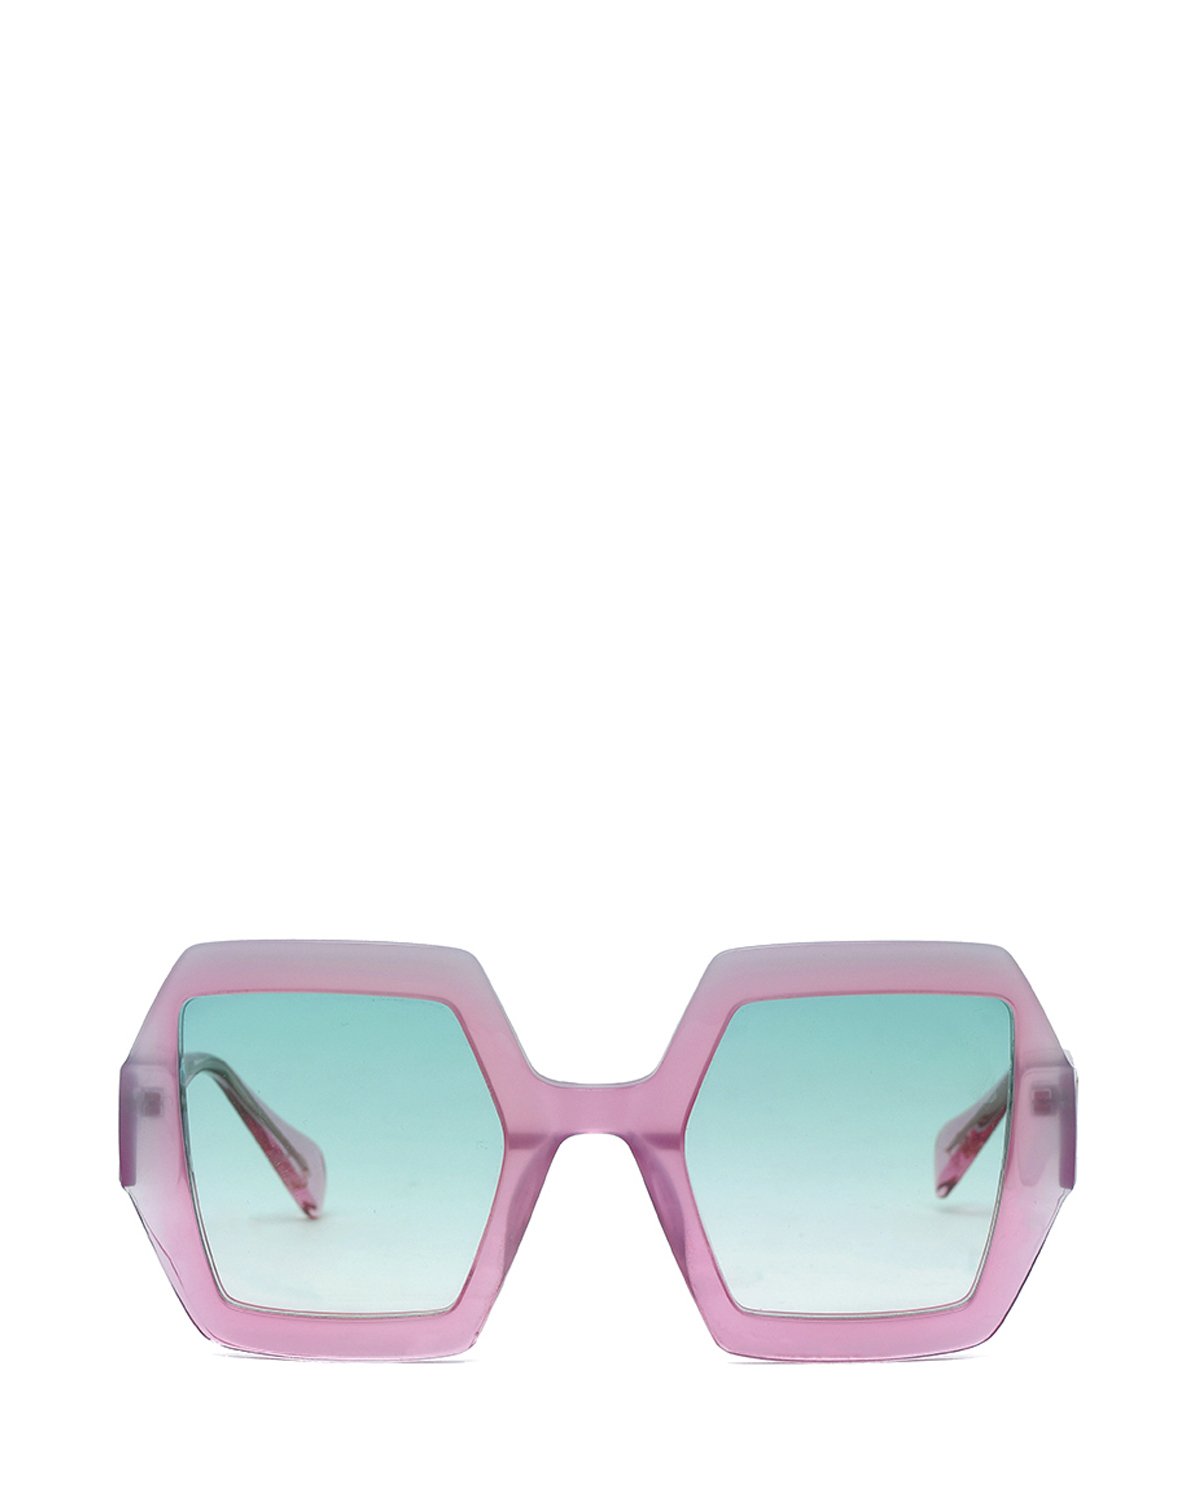 New Style Womens Ladies Sunglasses Square Oversized Luxury Flat Top  Black/Silver | eBay